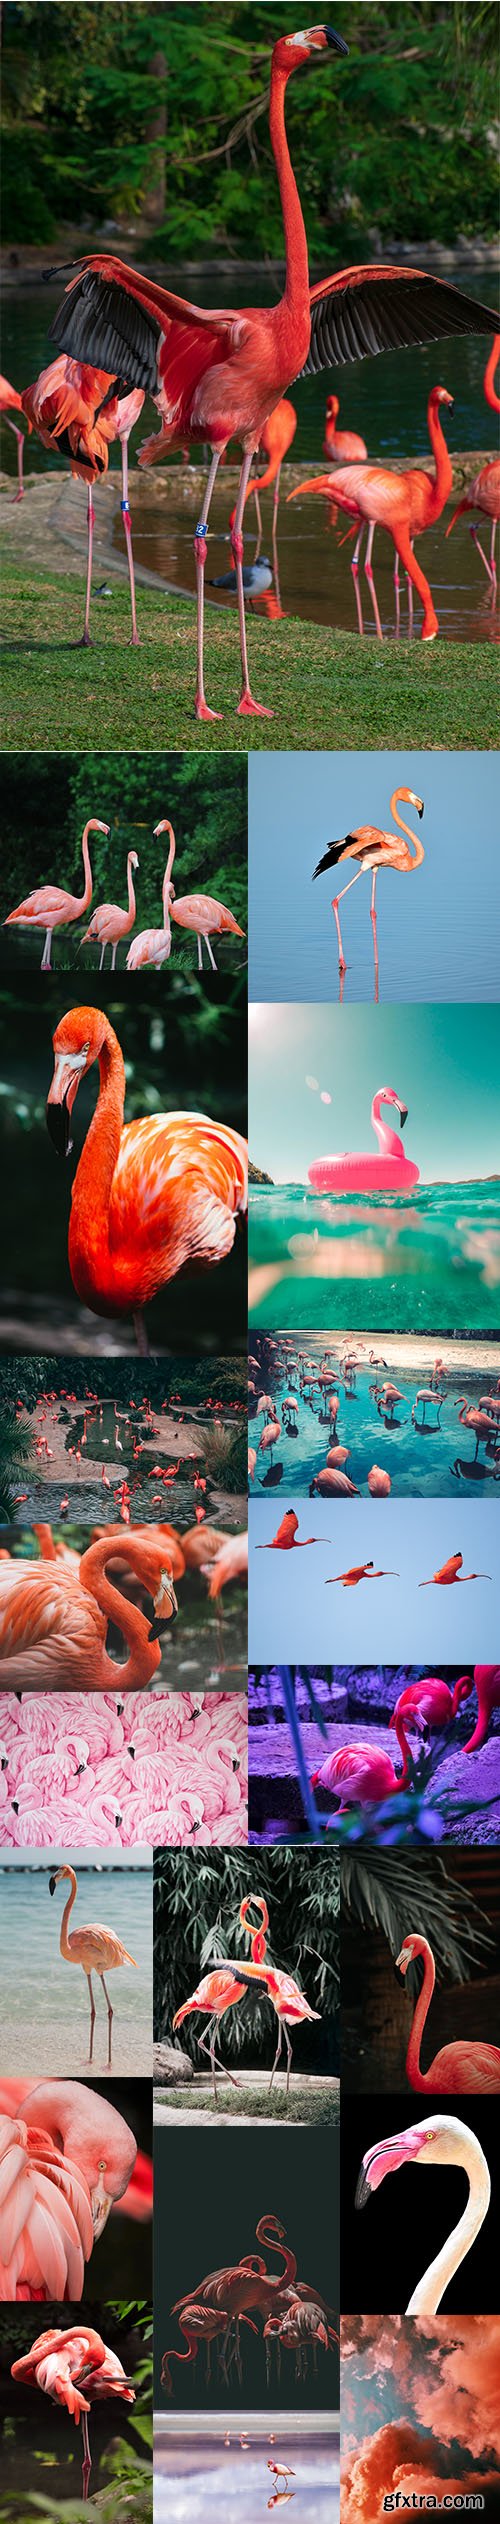 Flamingo - Premium UHQ JPEG Stock Photo Bundle